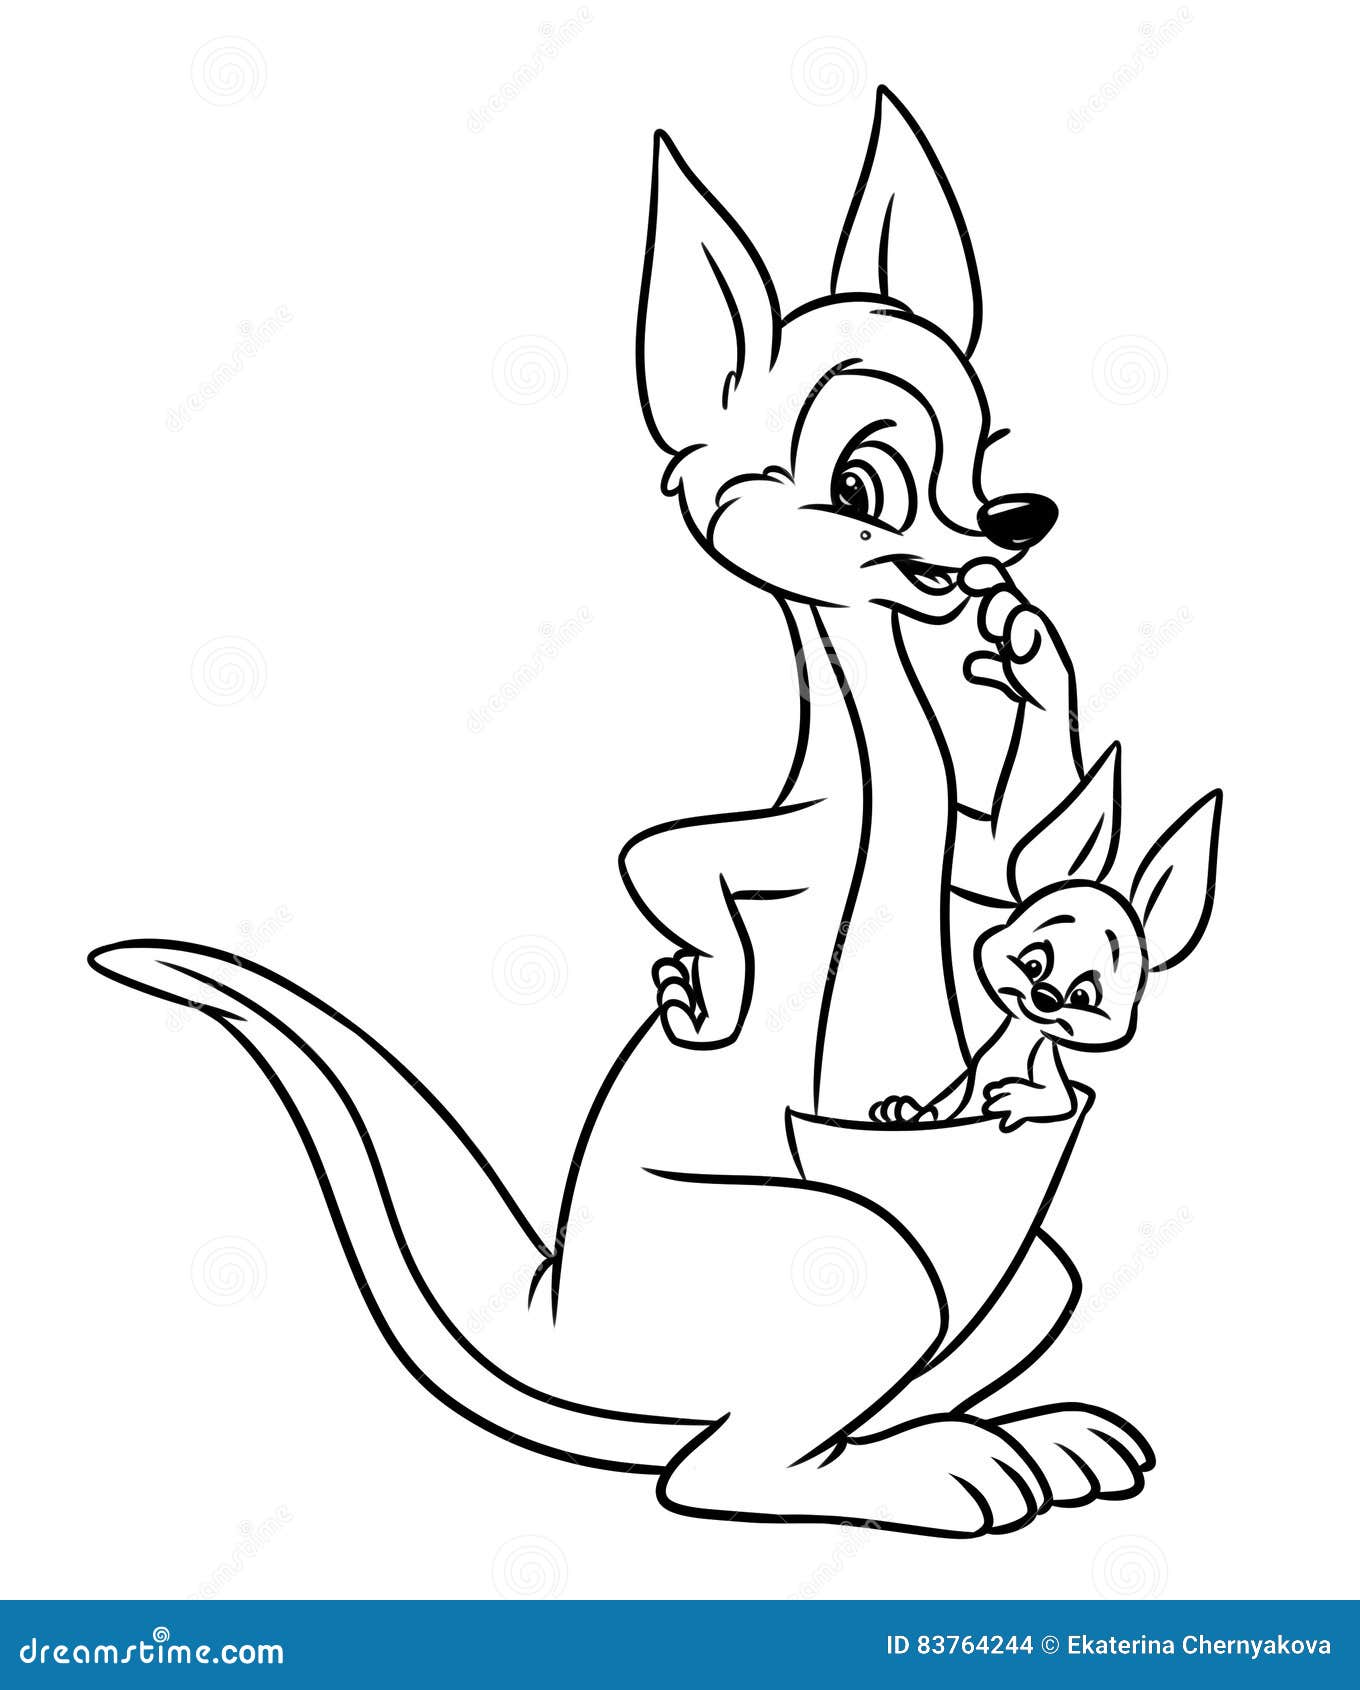 Kangaroo Animal Coloring Pages Cartoon Stock Illustration ...